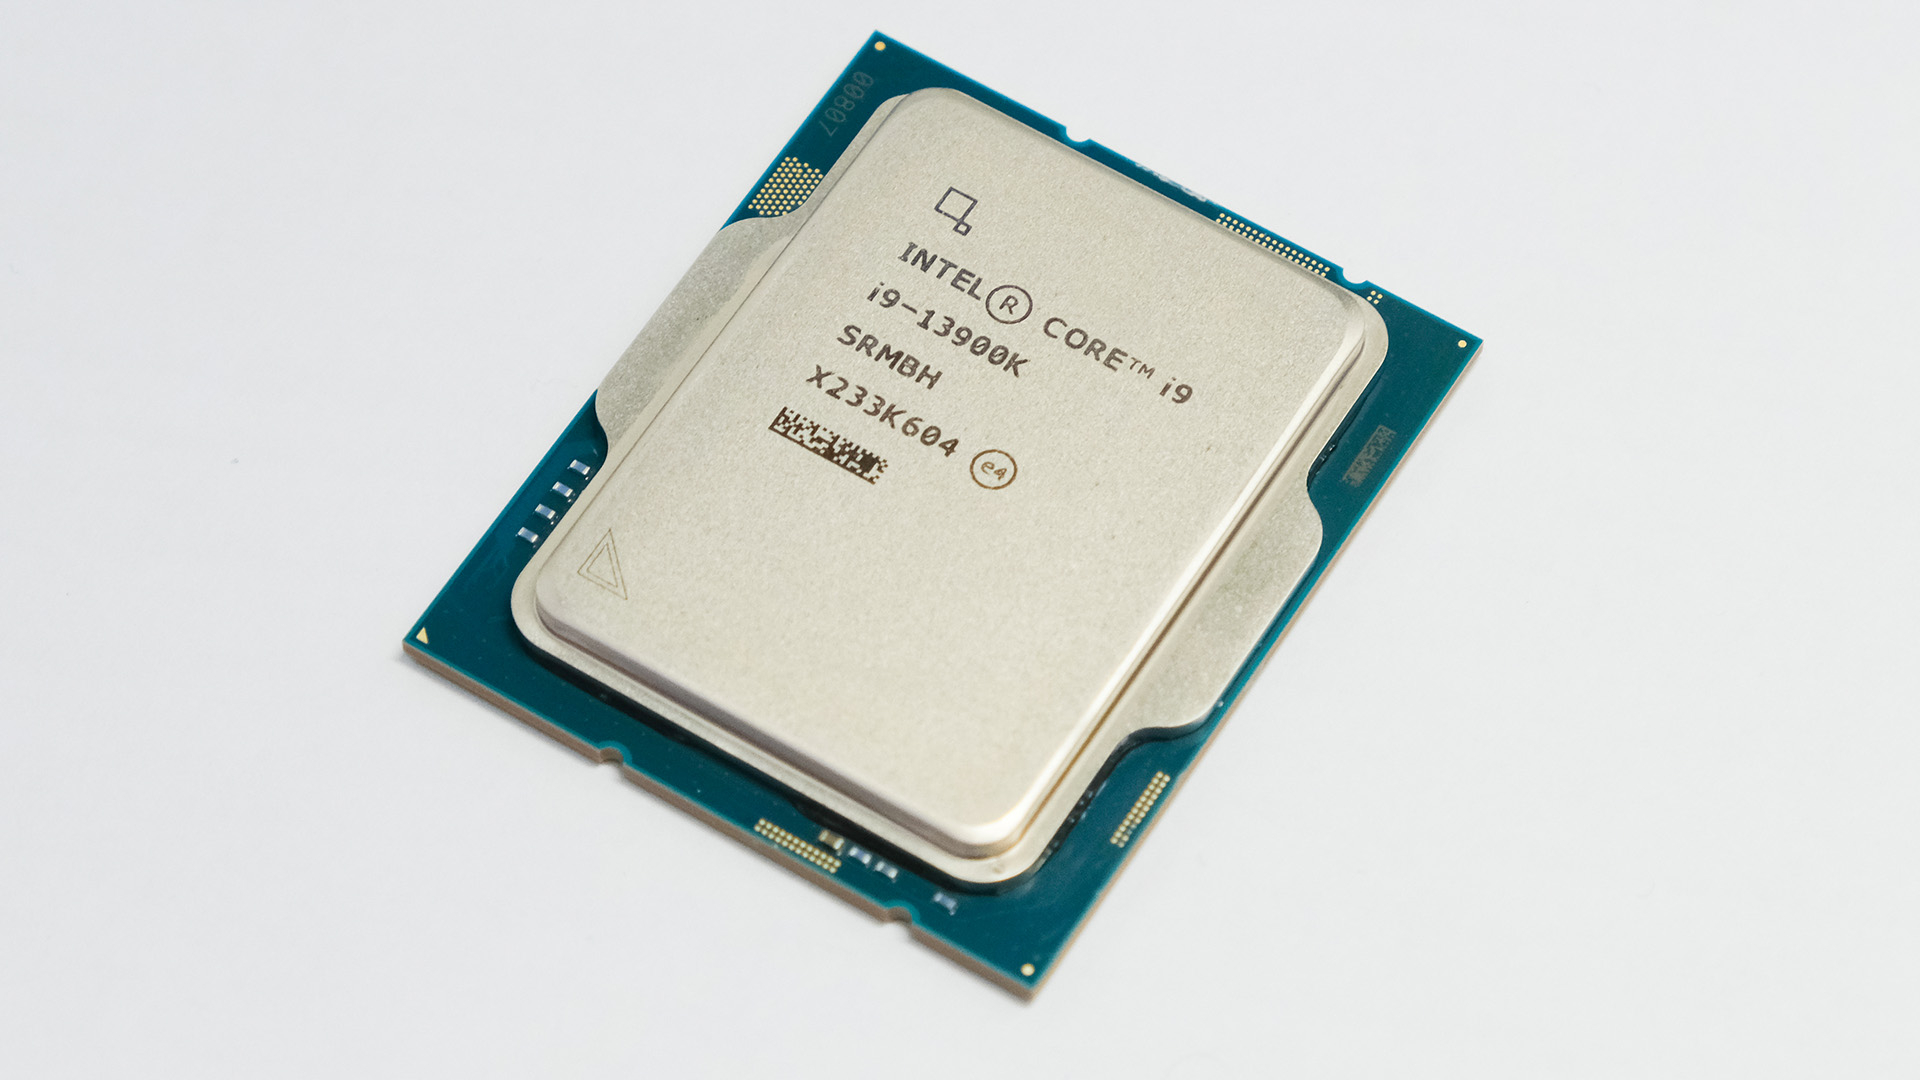 Intel Core i9-13900K review